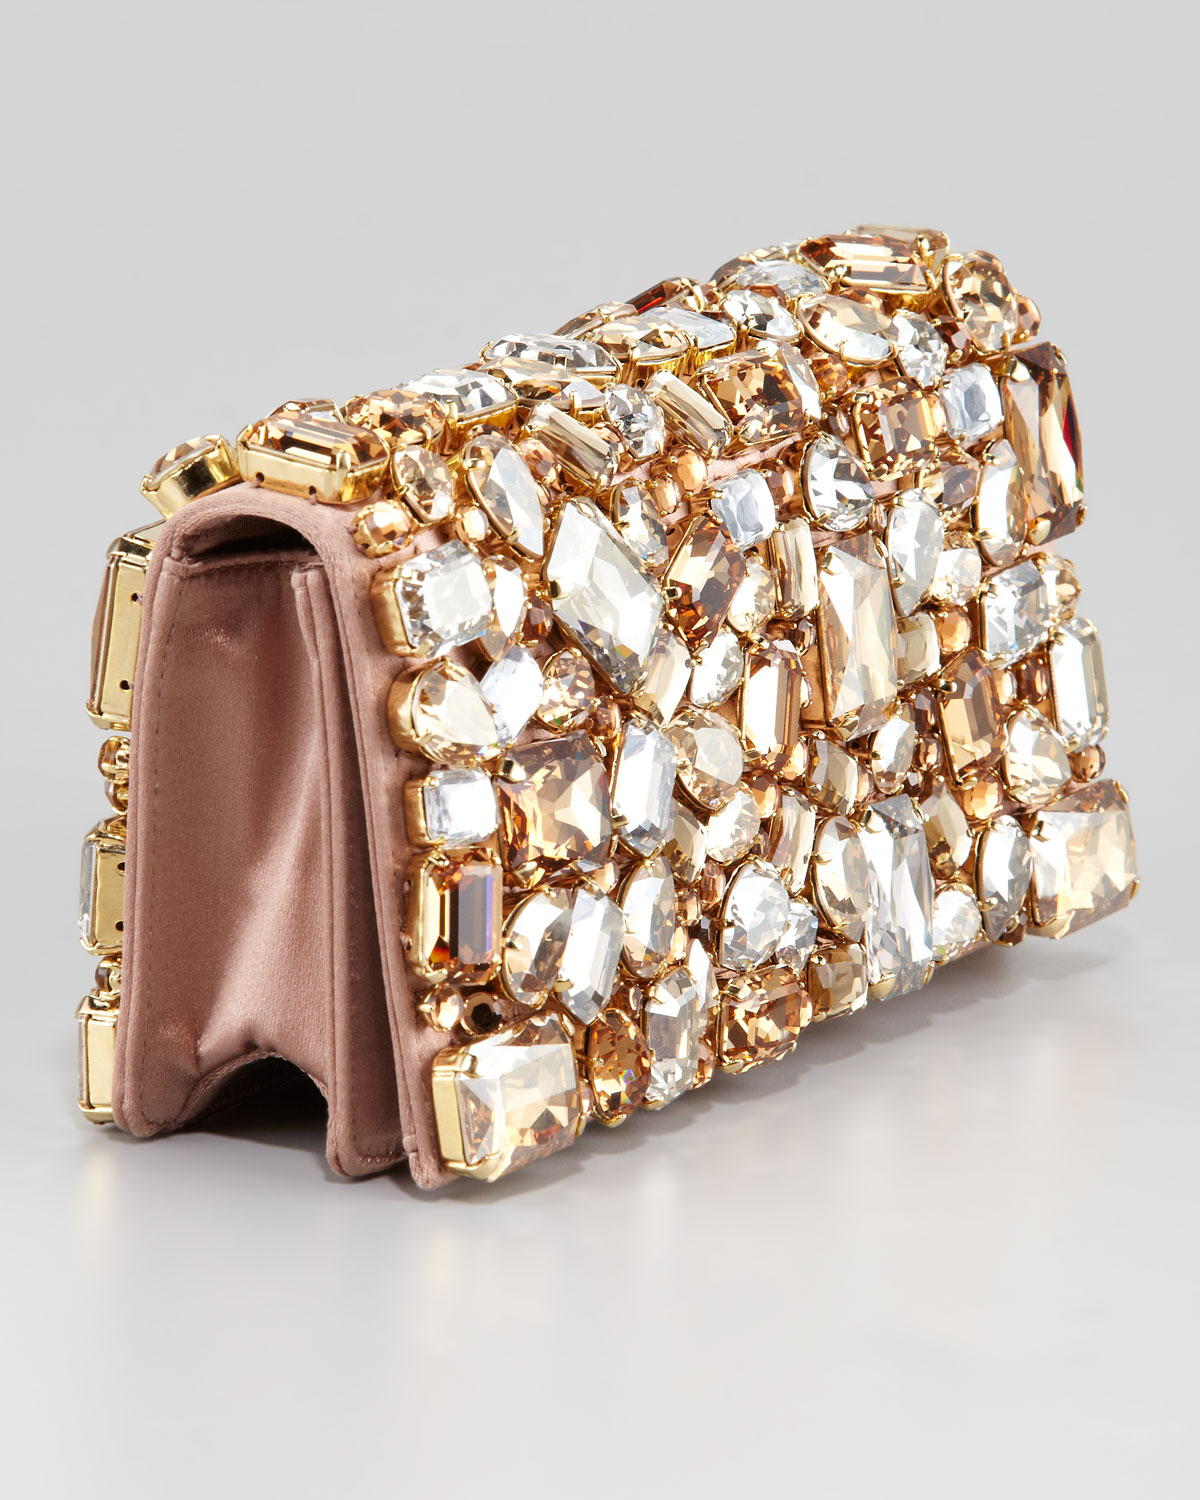 Prada Jeweled Clutch Bag in Multicolor | Lyst  